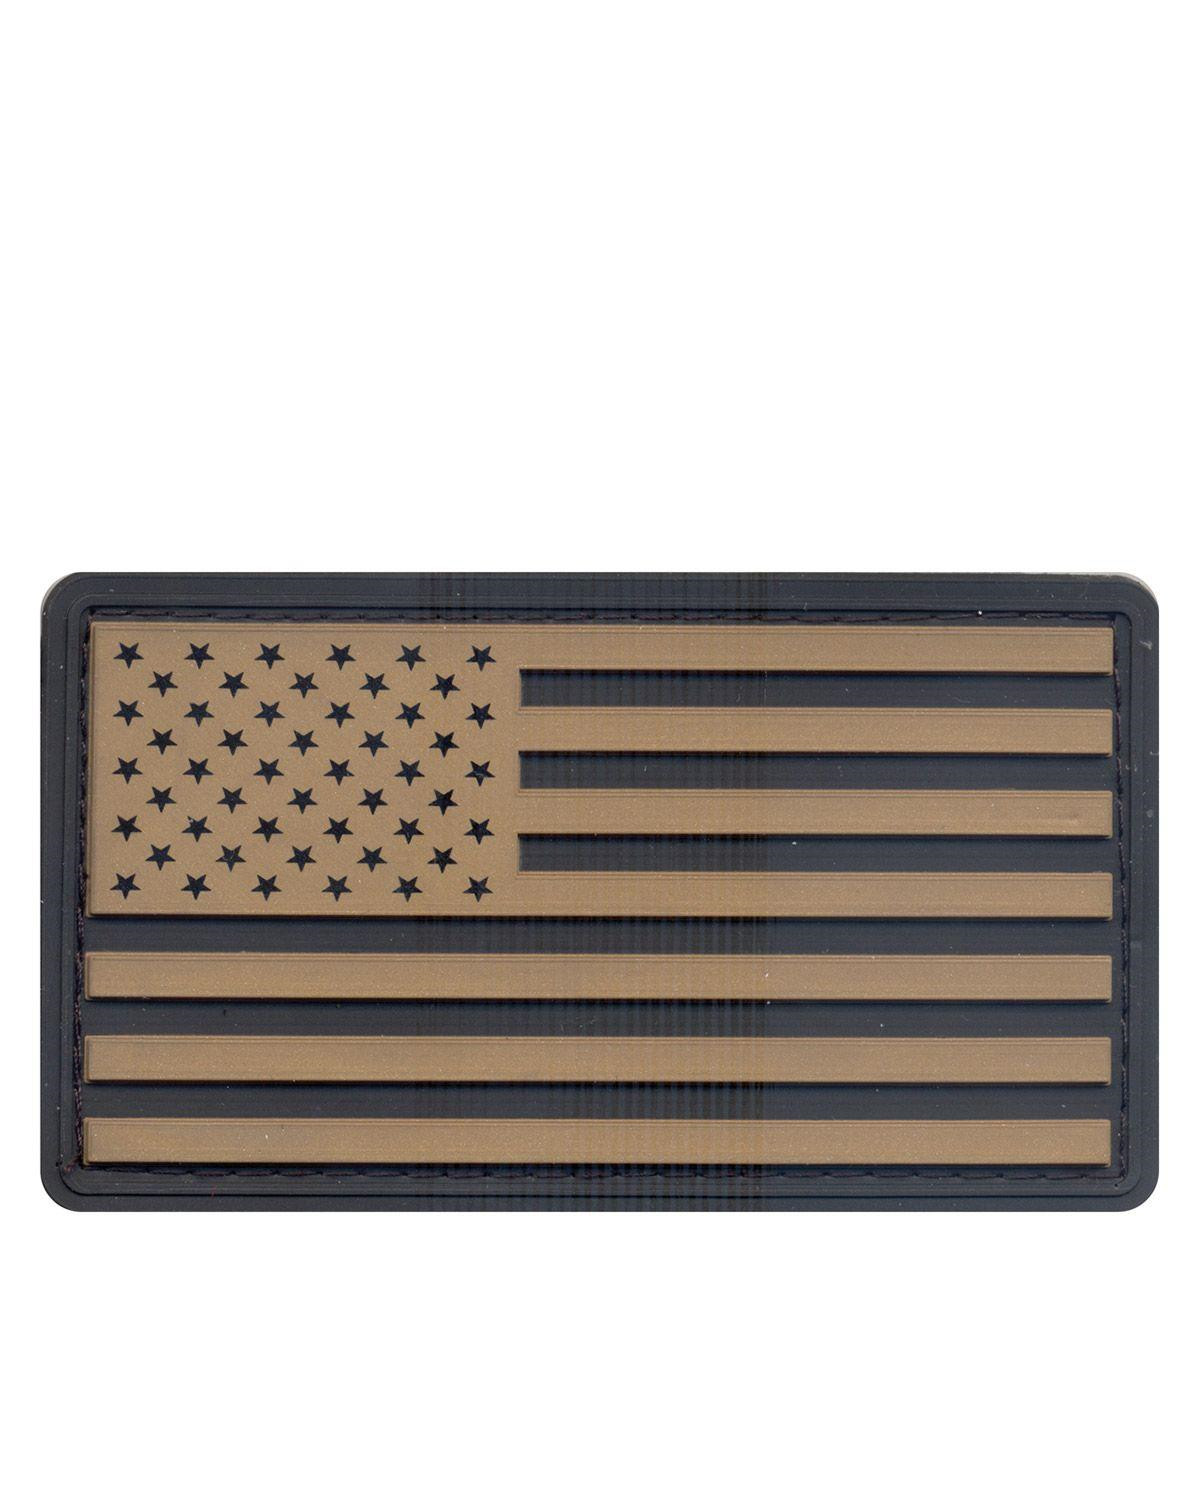 Rothco PVC Patch - US Flag (Black / Khaki, One Size)